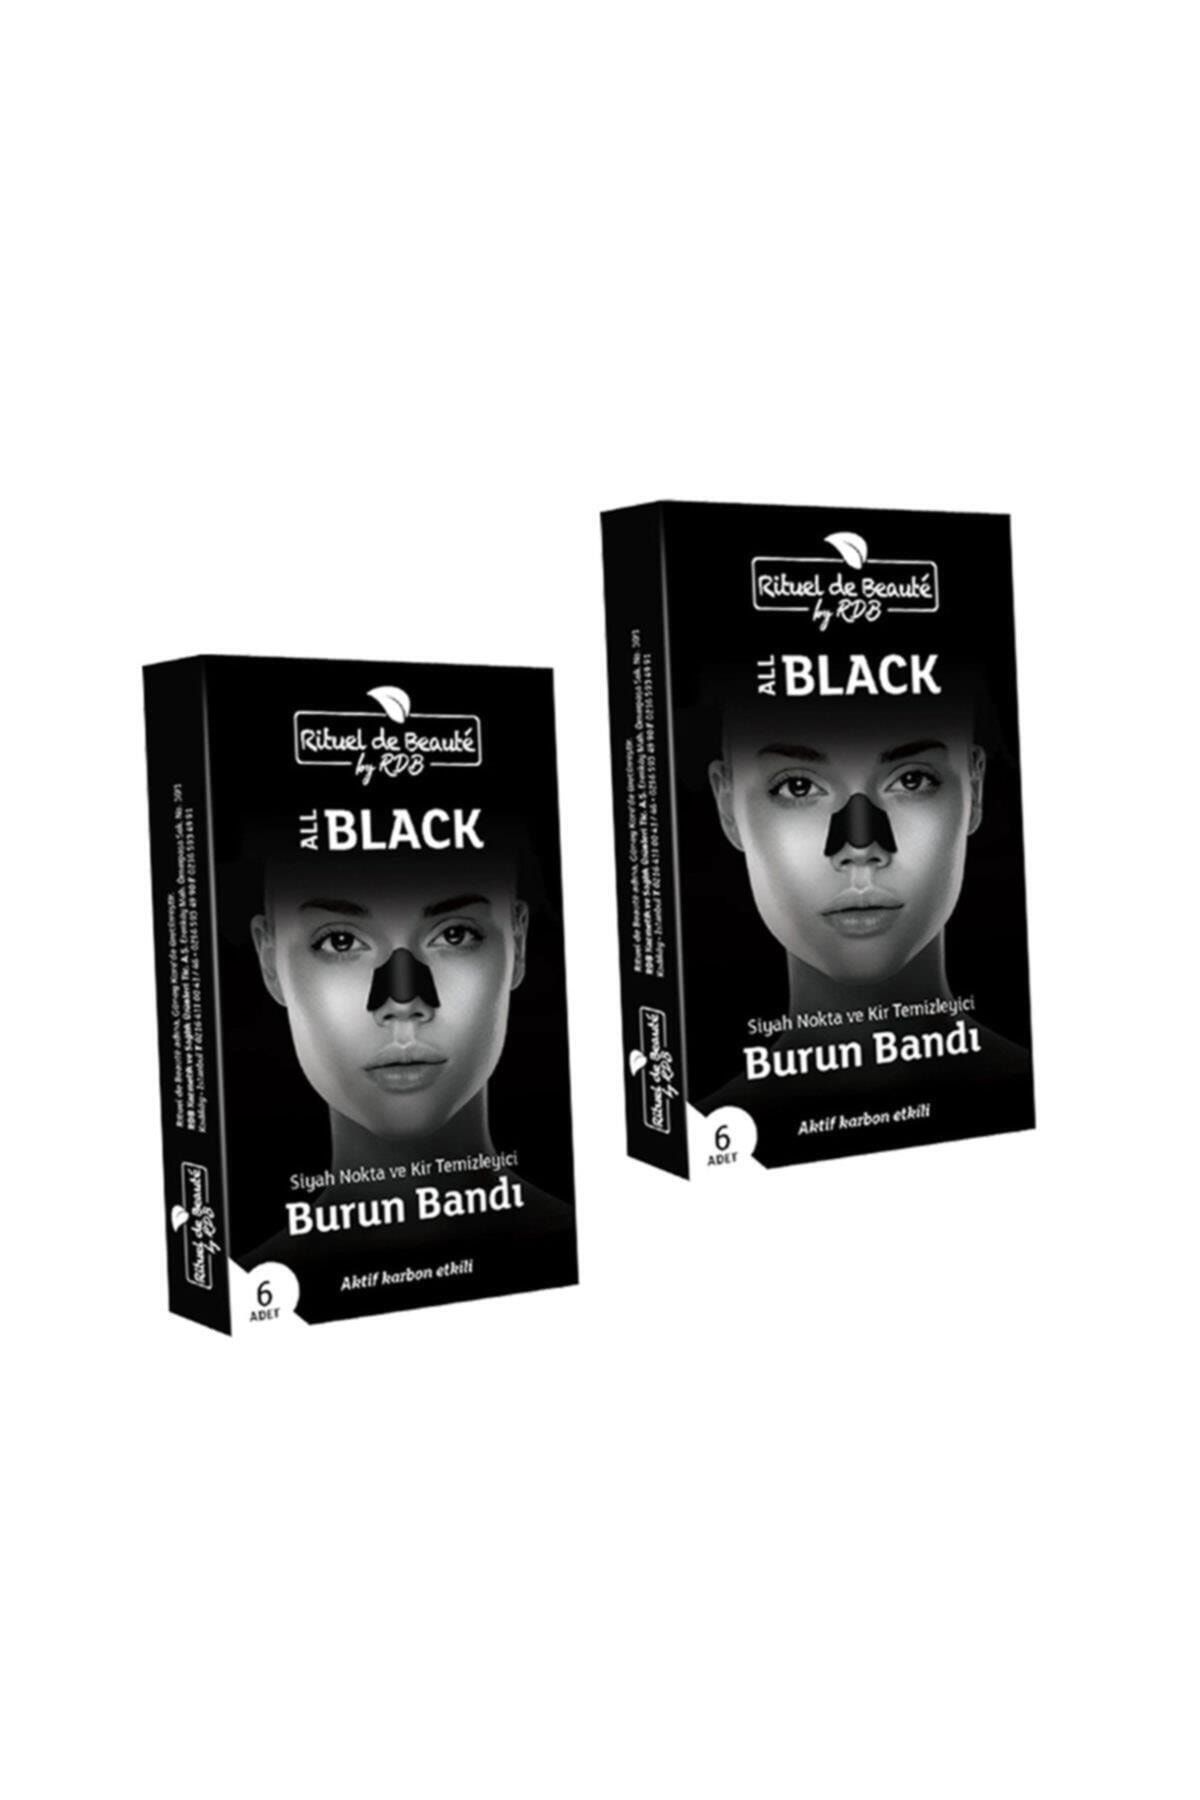 Rituel De Beaute Black Aktif Karbon Siyah Nokta Ve Kir Temizleyici 2 Kutu 12 Adet Burun Bandı